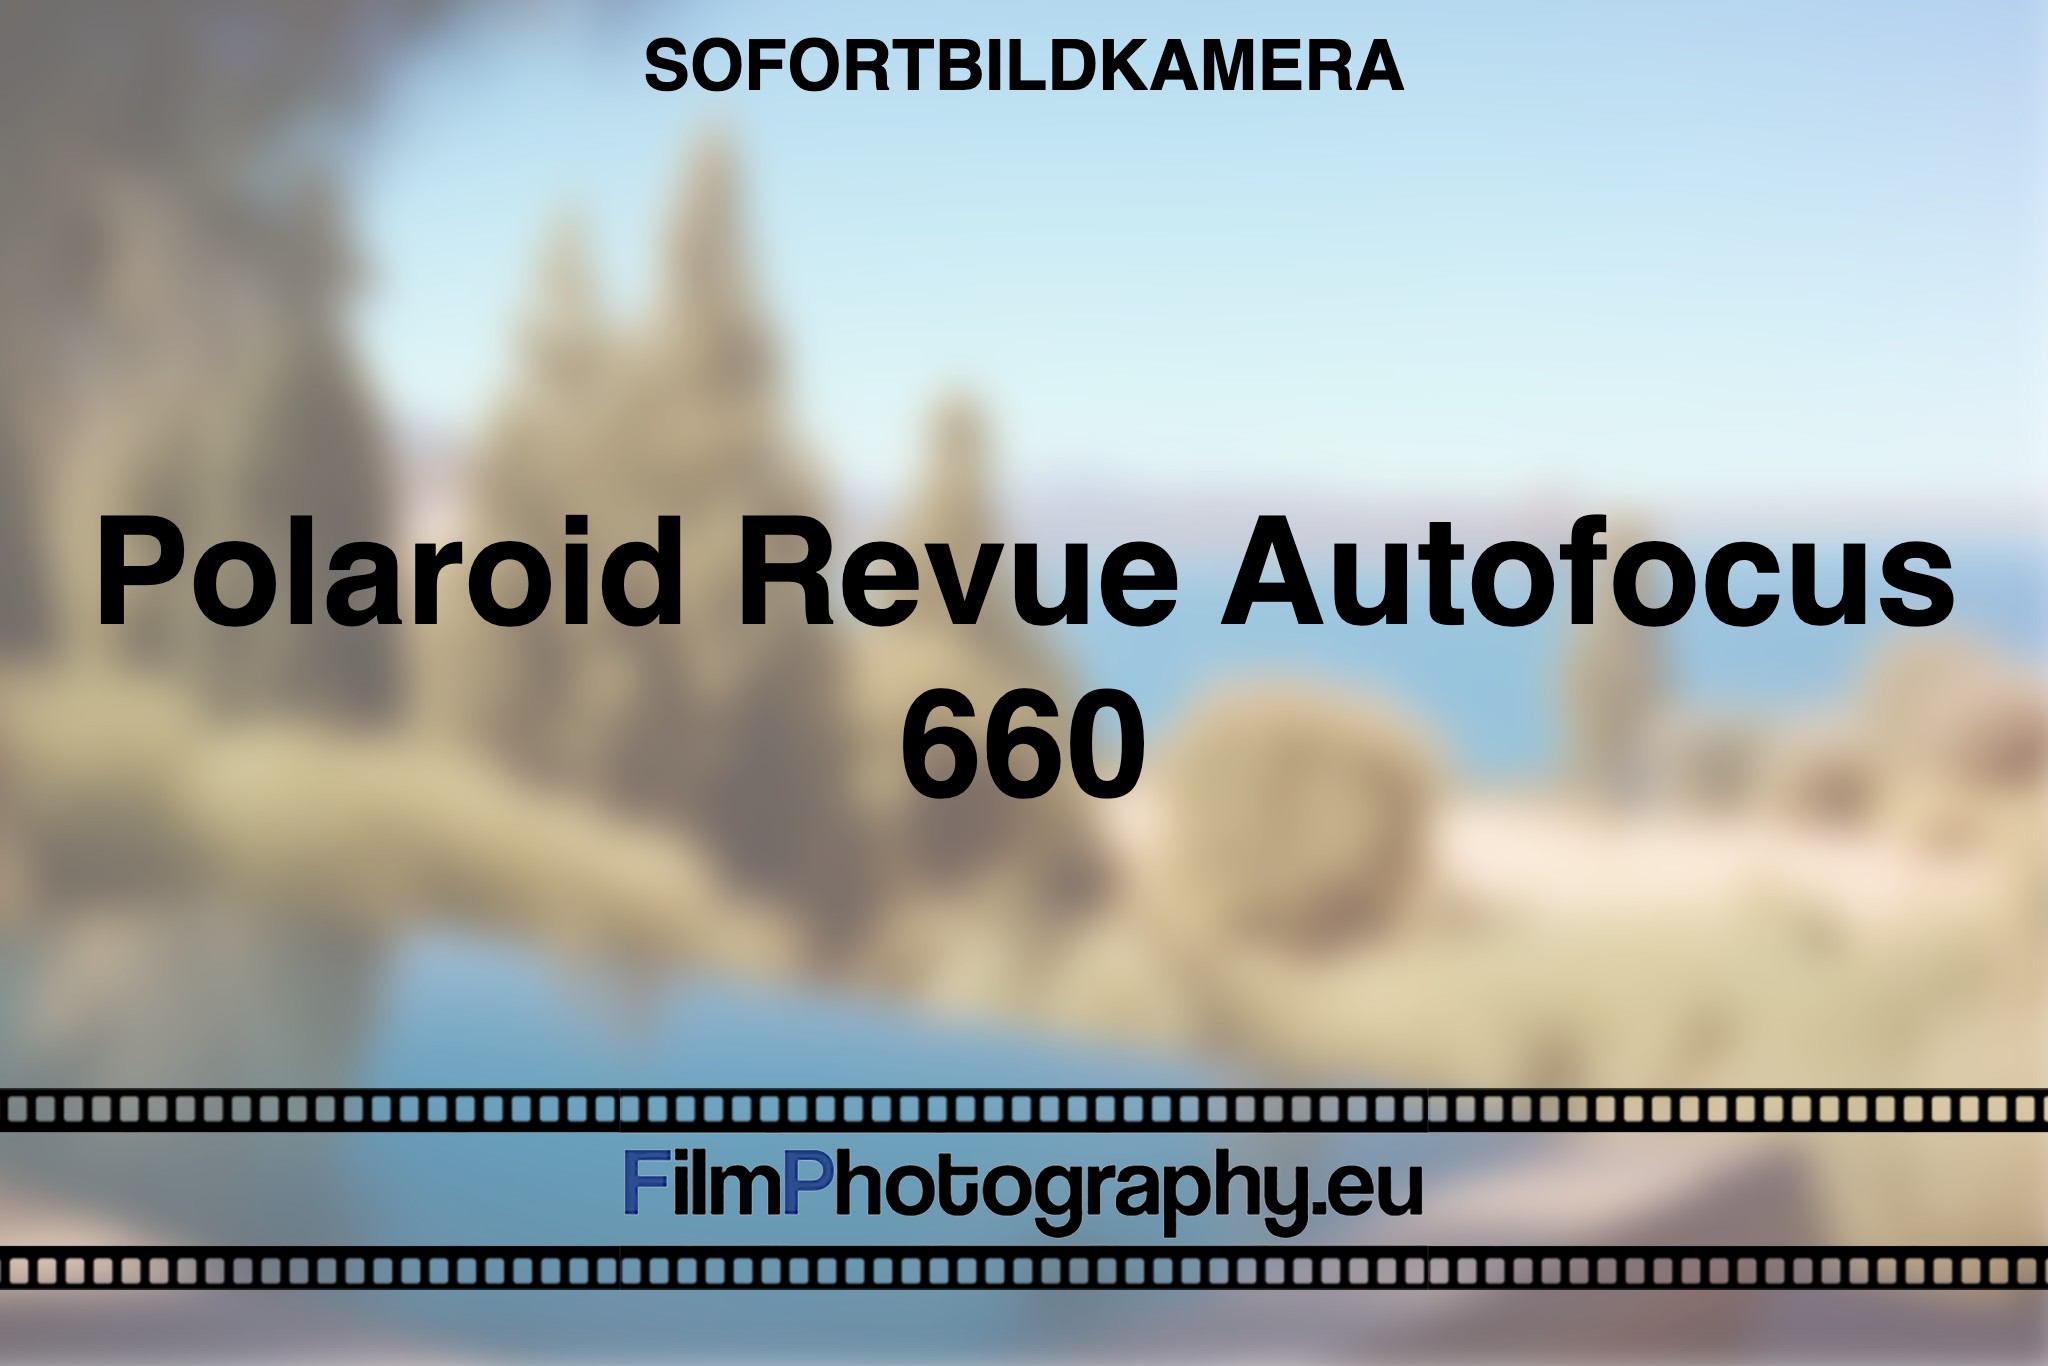 polaroid-revue-autofocus-660-sofortbildkamera-bnv